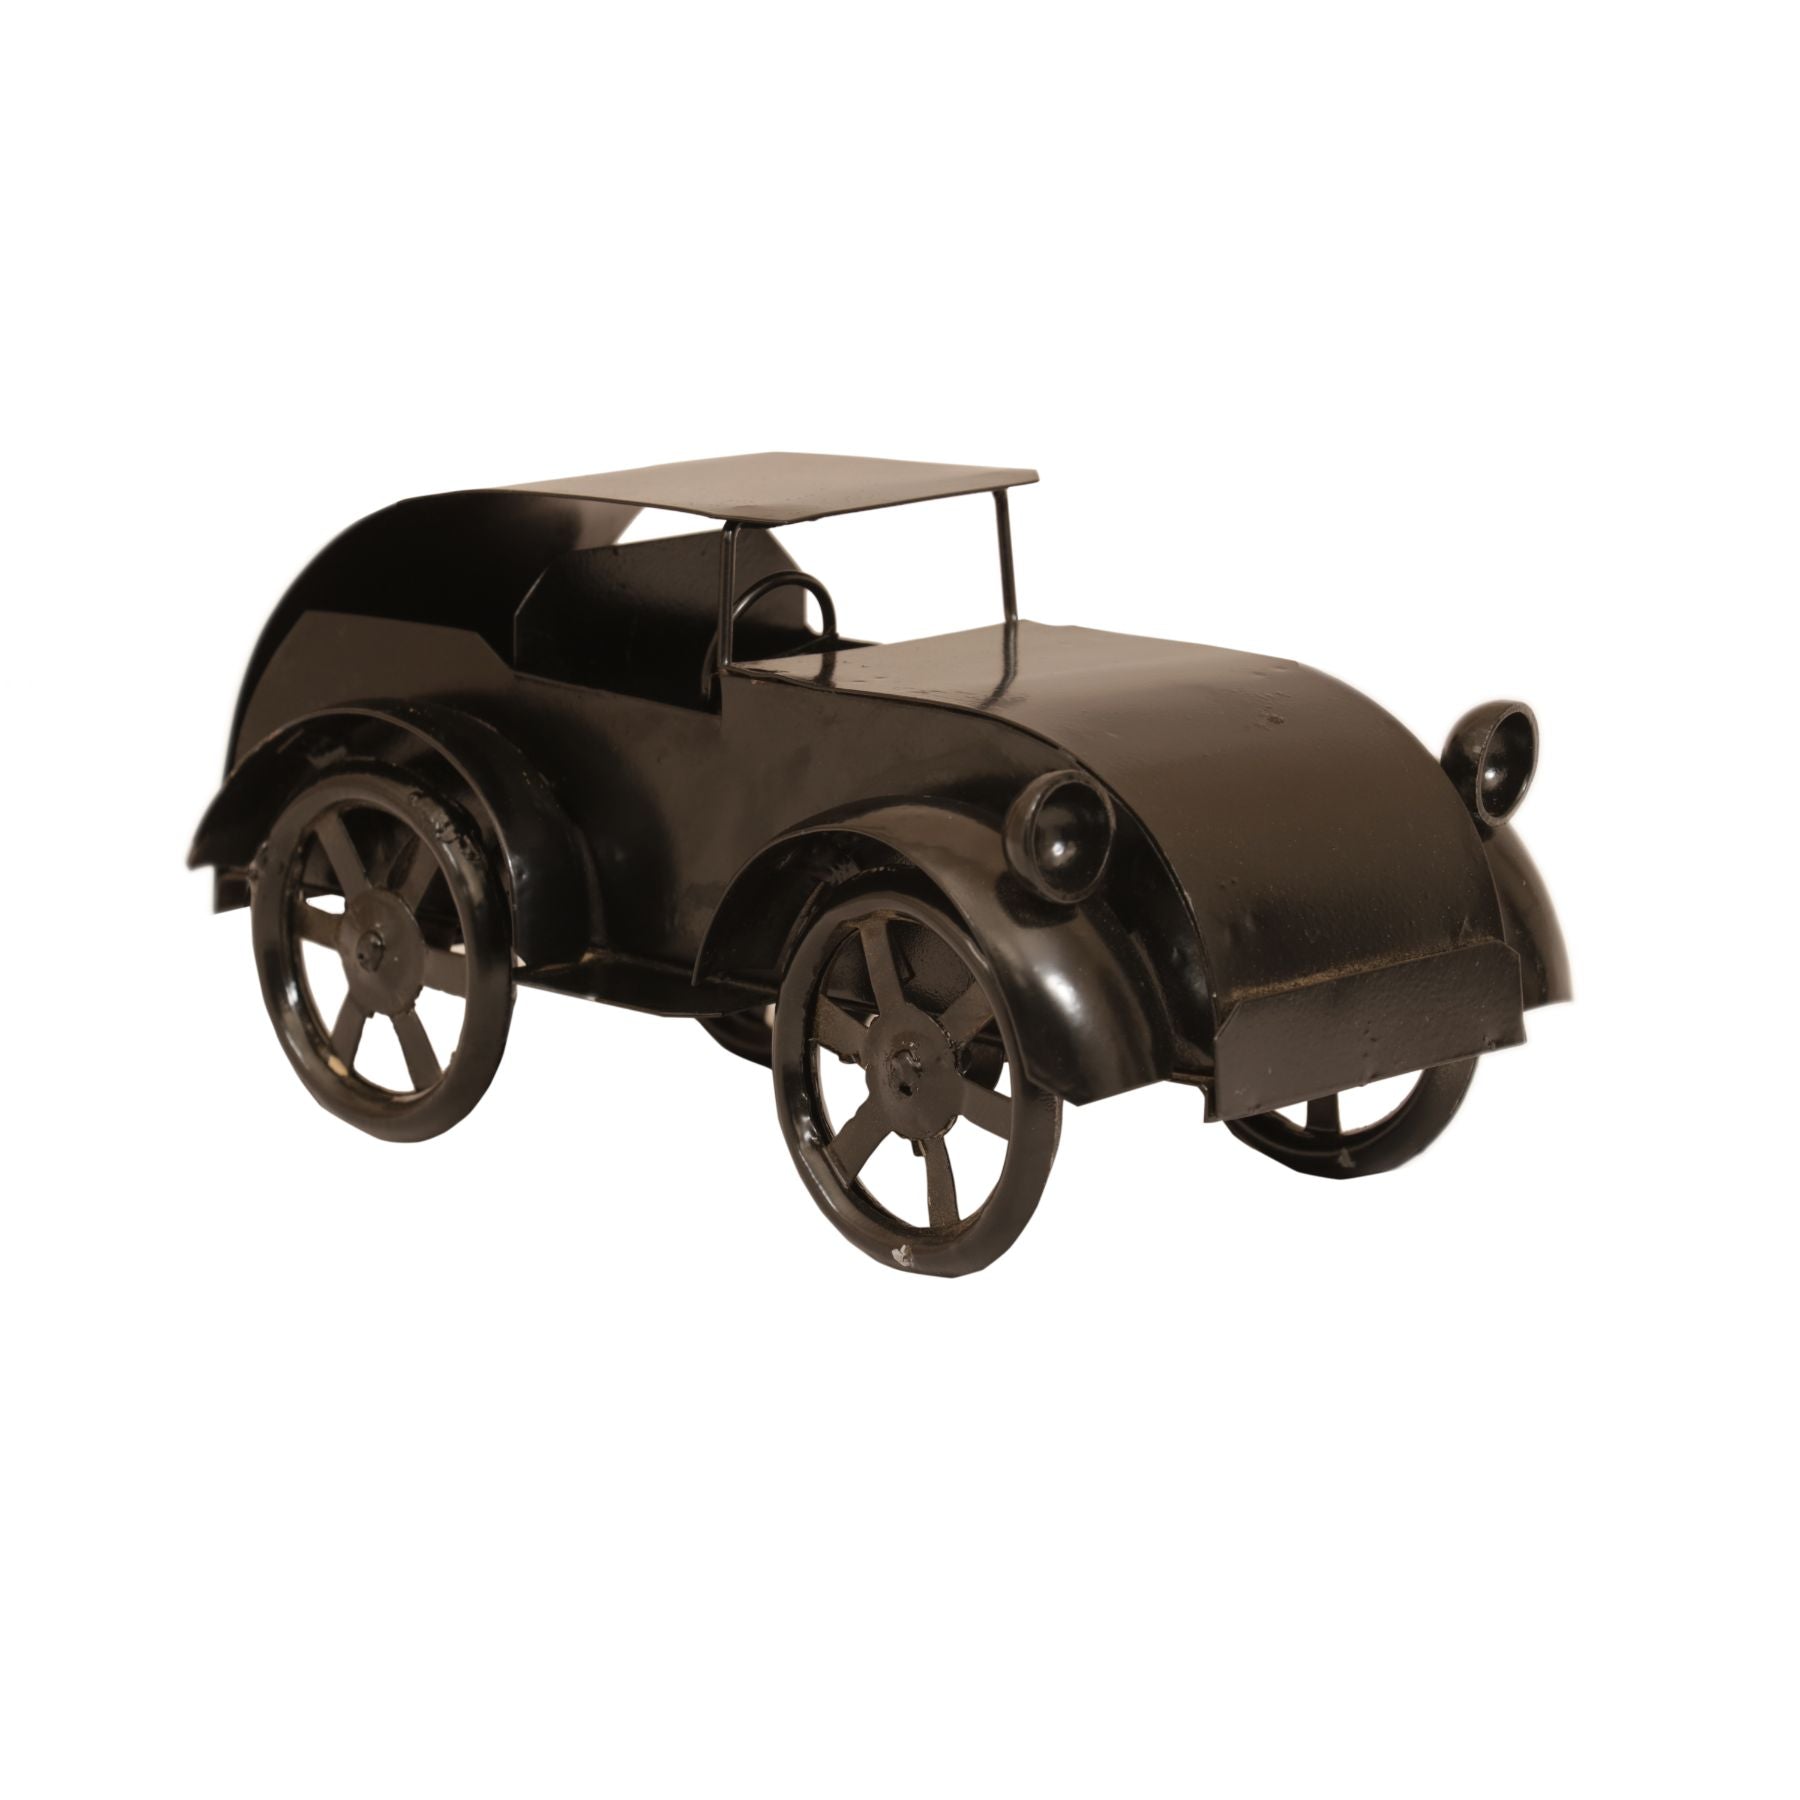 Antiques Metal Miniature Car Vehicle figurine